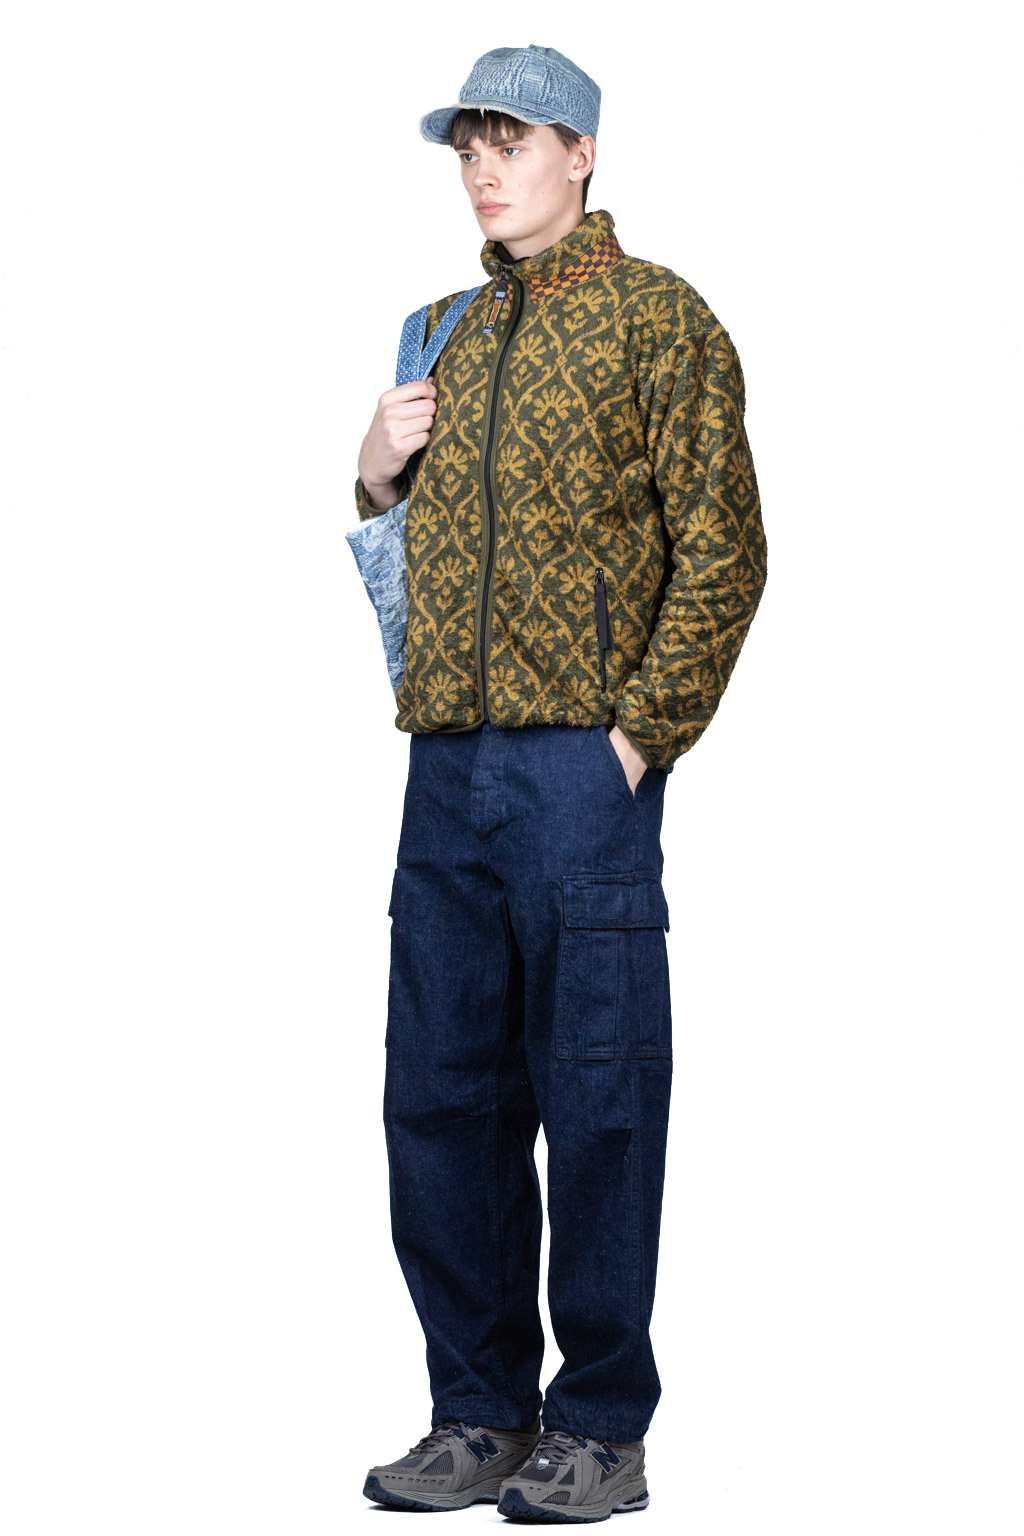 KAPITAL "Yosemite Arabesque Pattern Fleece Zip Blouson" 3 Colors  Unisex 5 Sizes